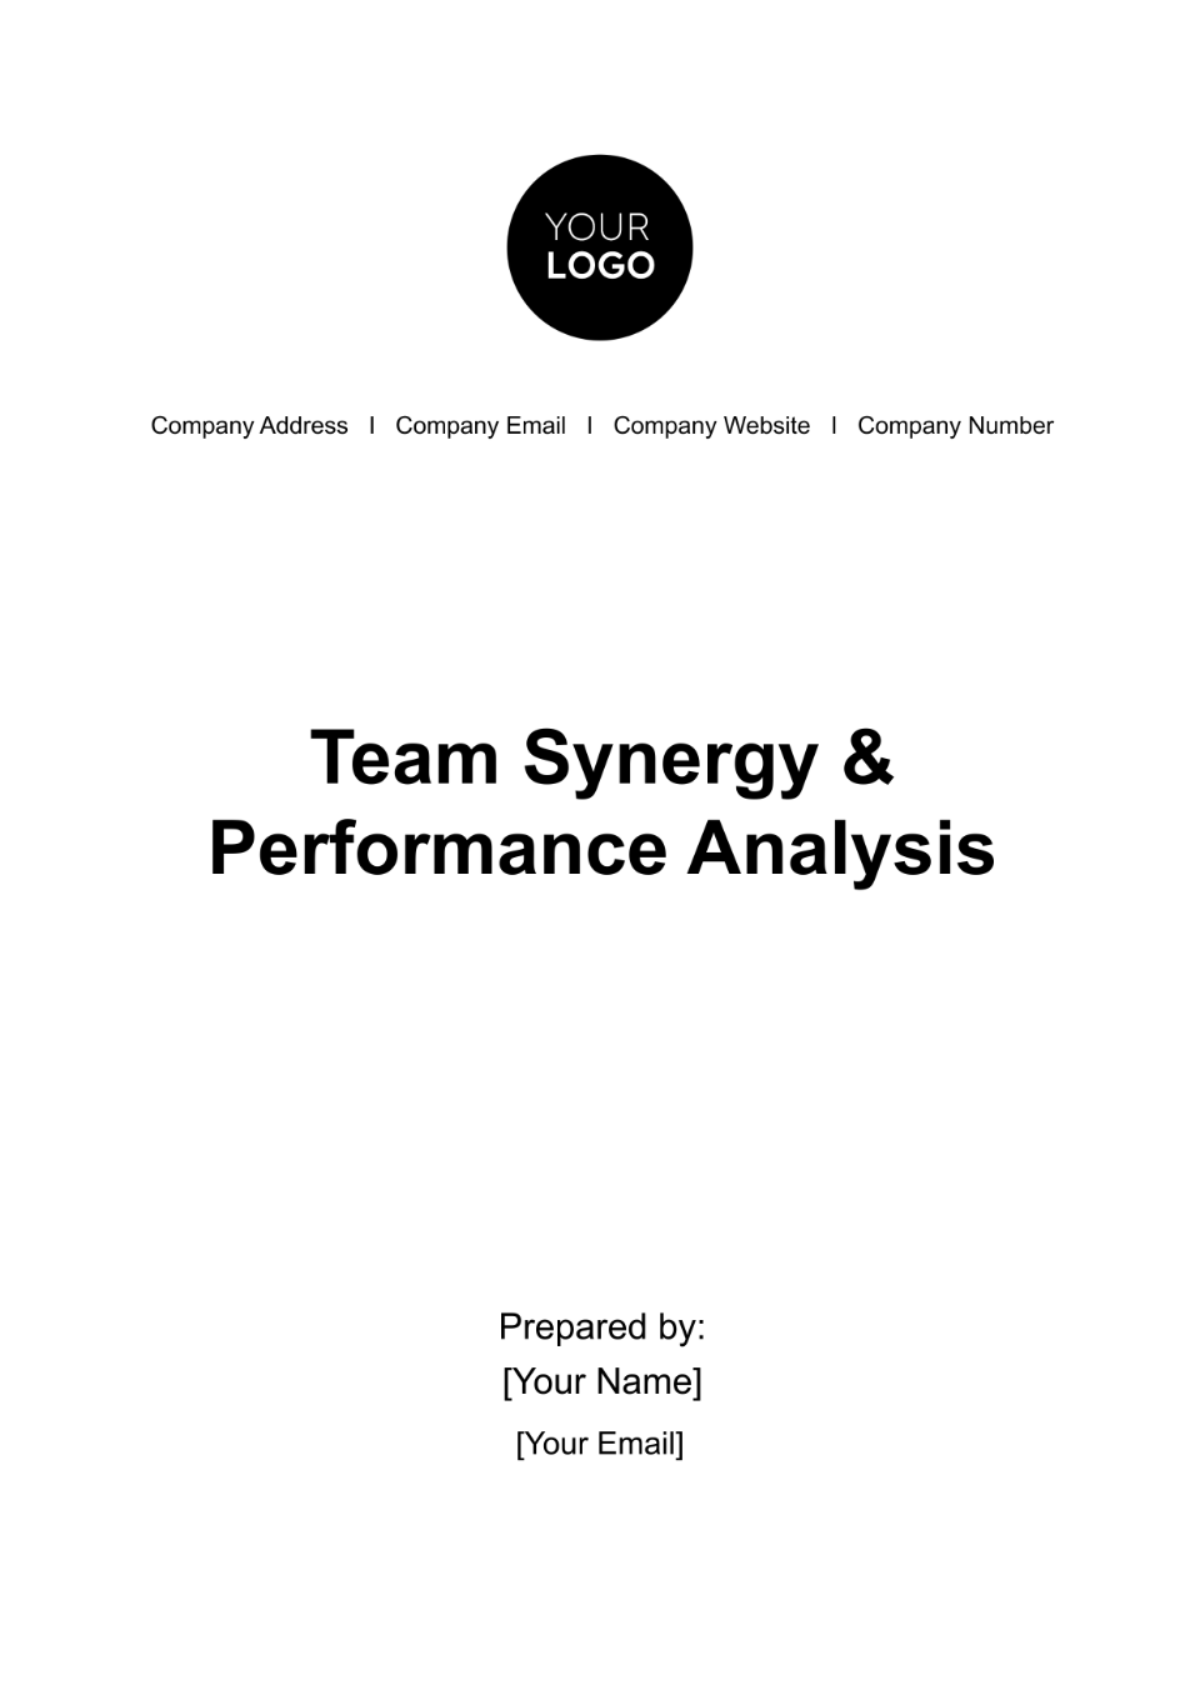 Team Synergy & Performance Analysis HR Template